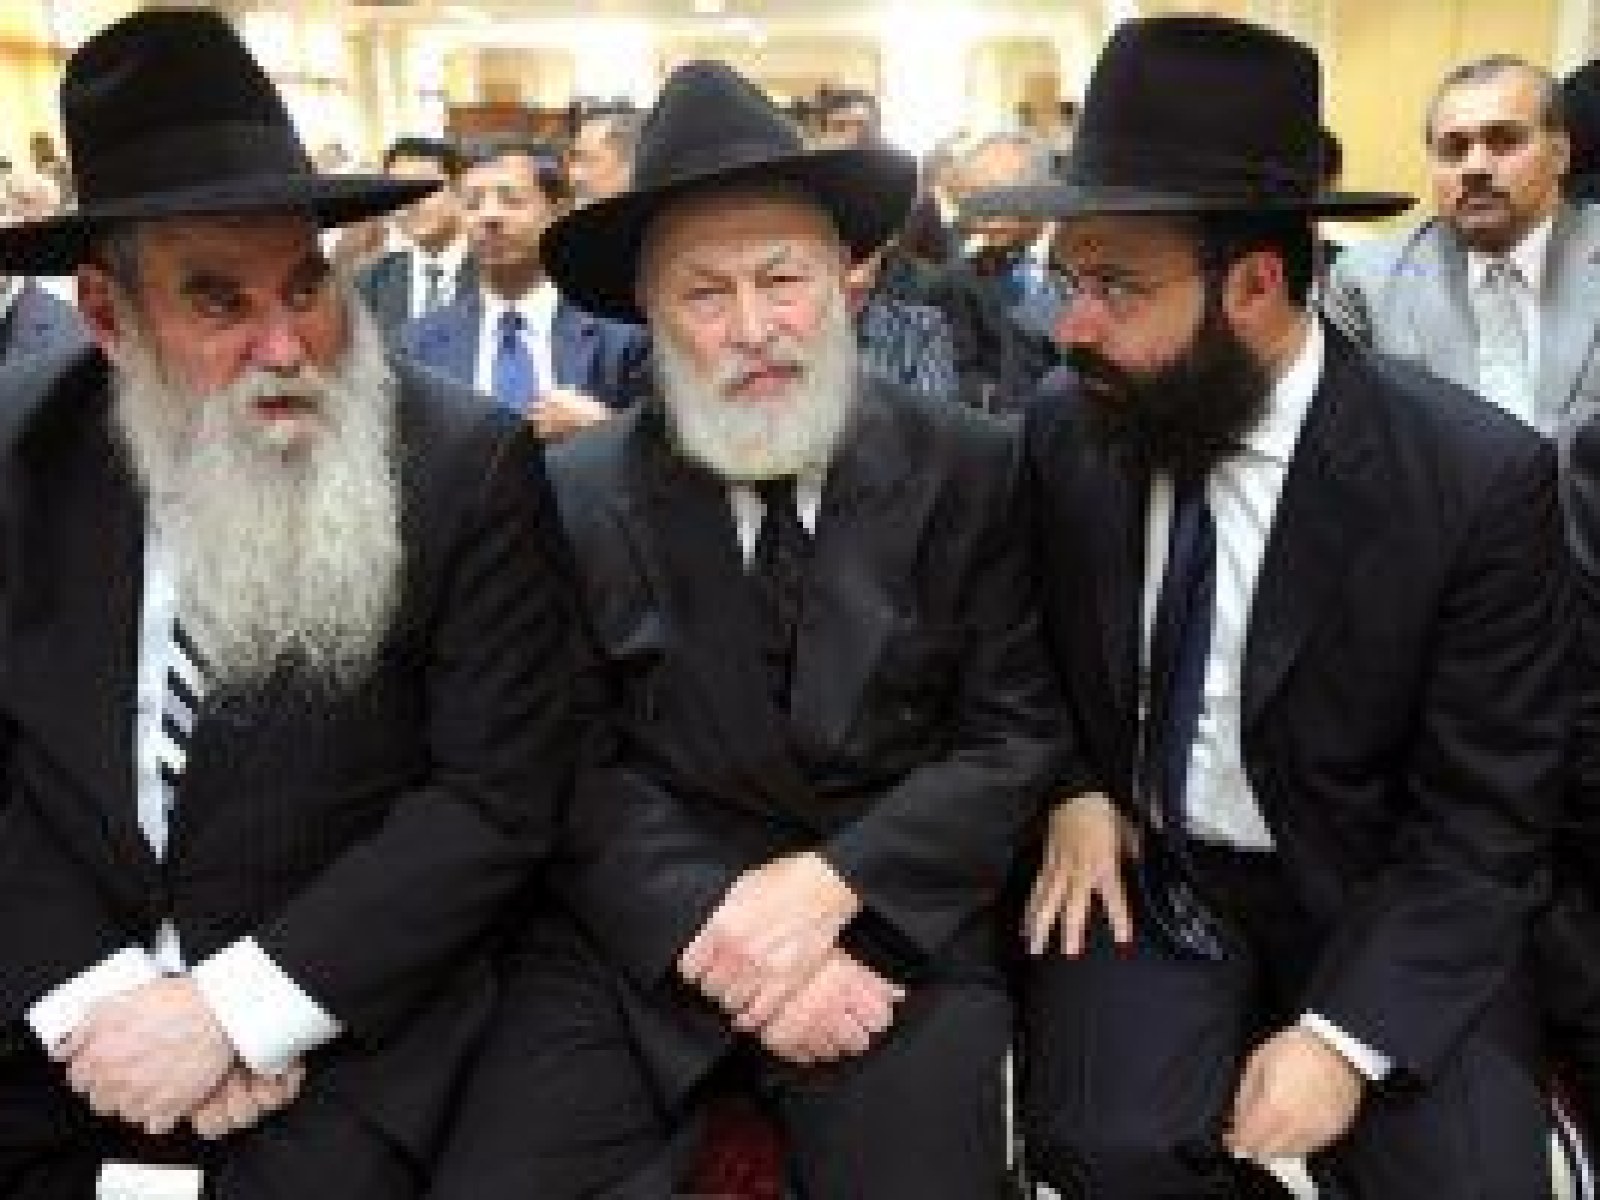 jewish rabbis